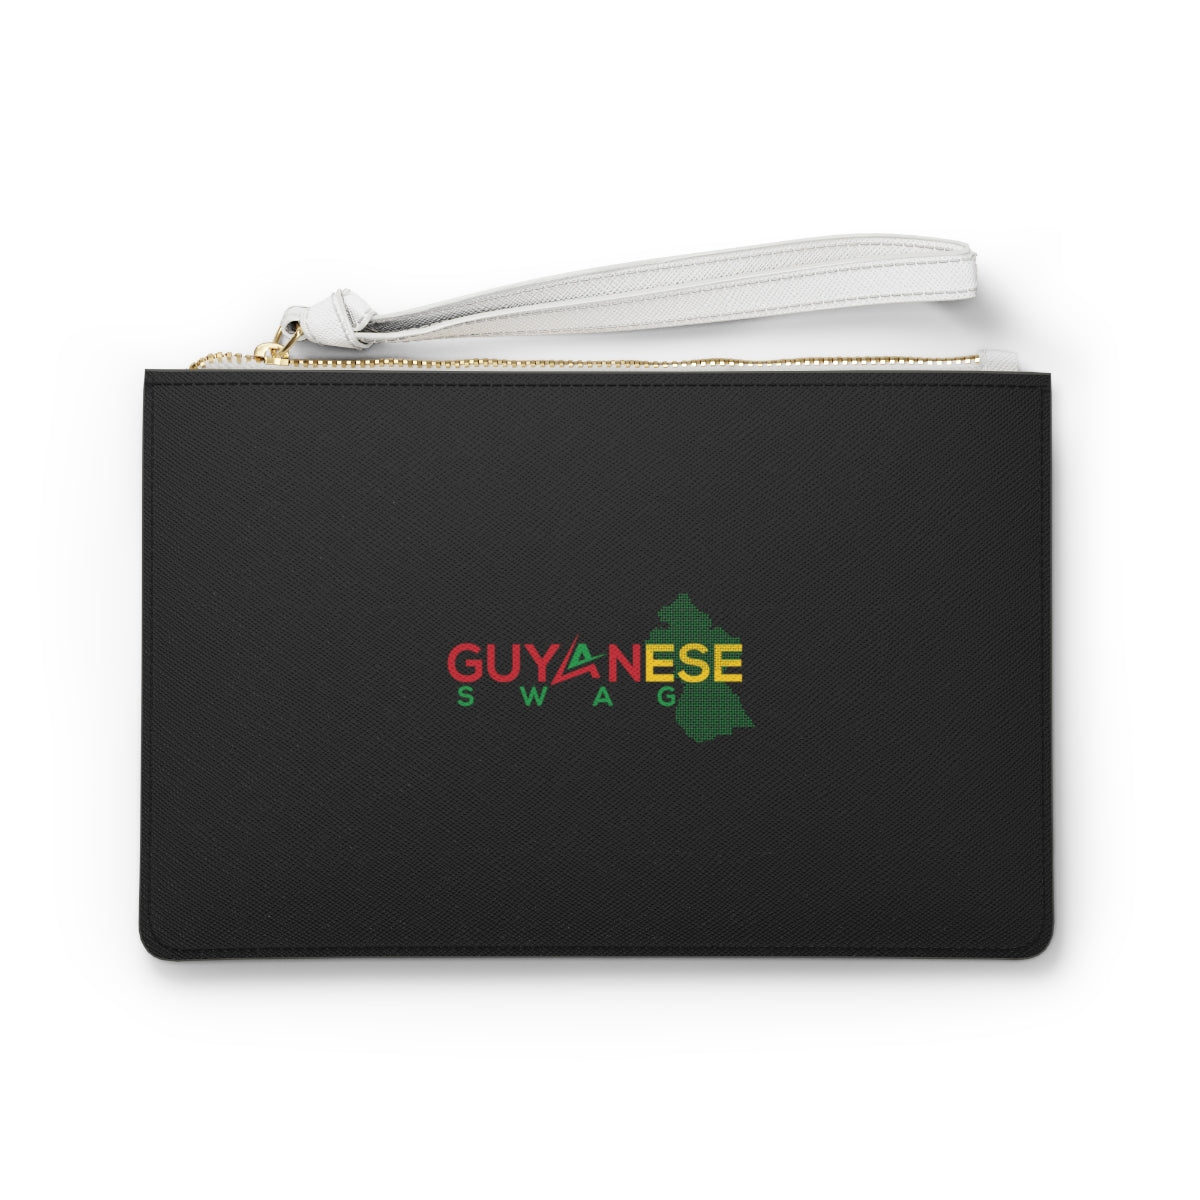 Guyanese Swag Clutch Bag.